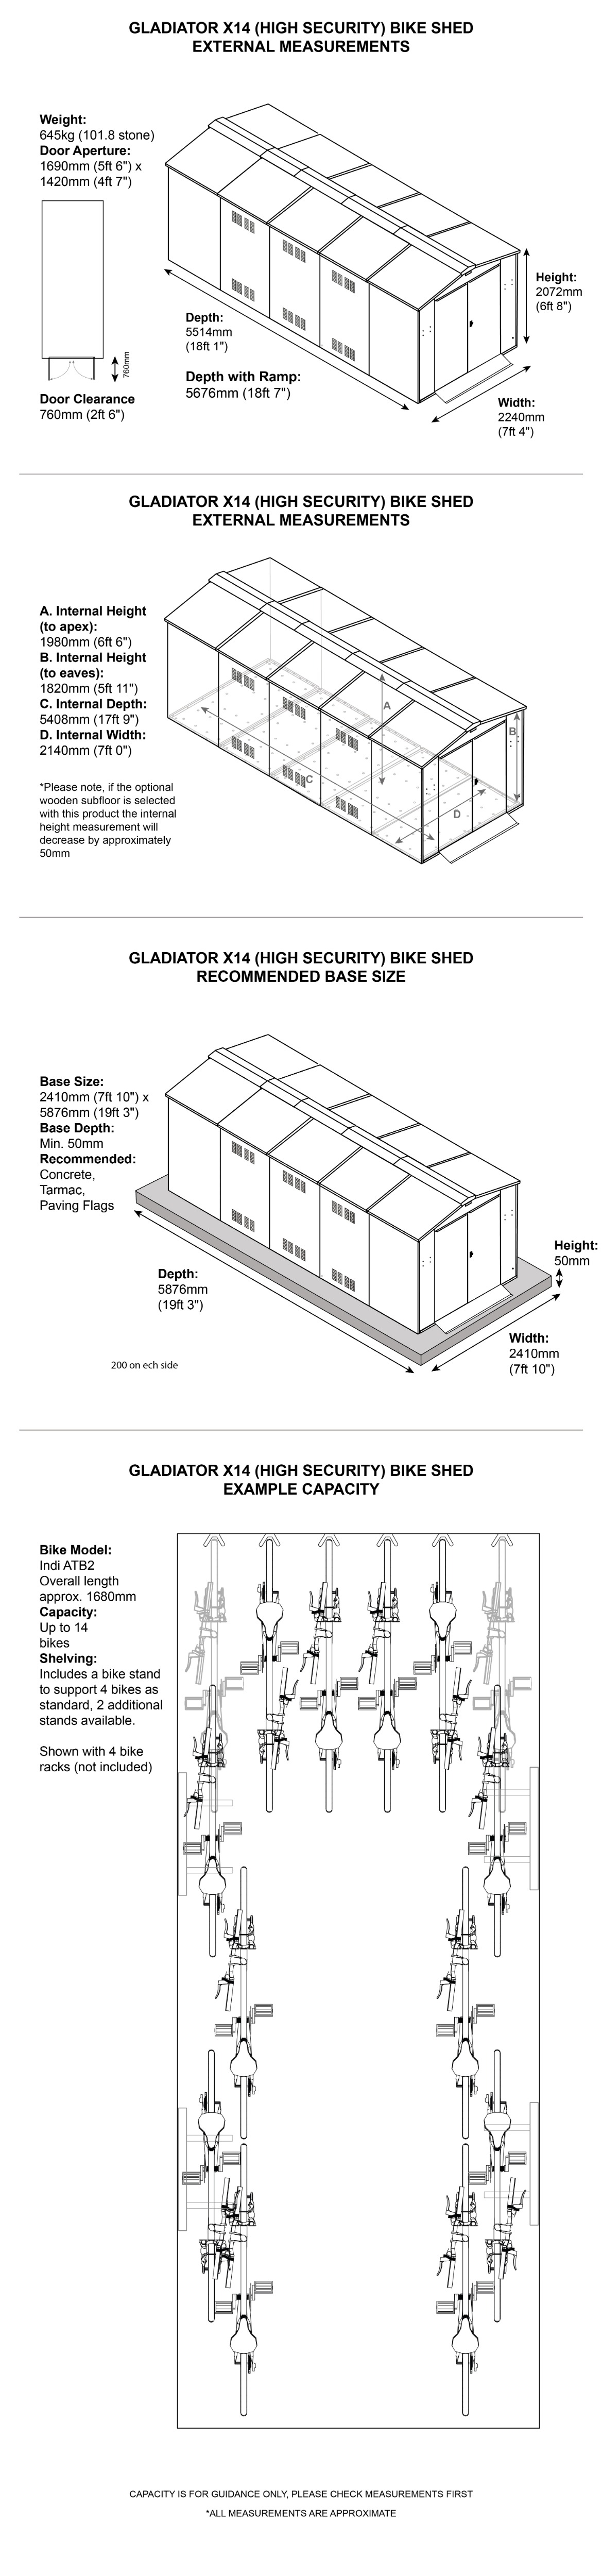 Gladiator Cycle Storage x14 dimensions